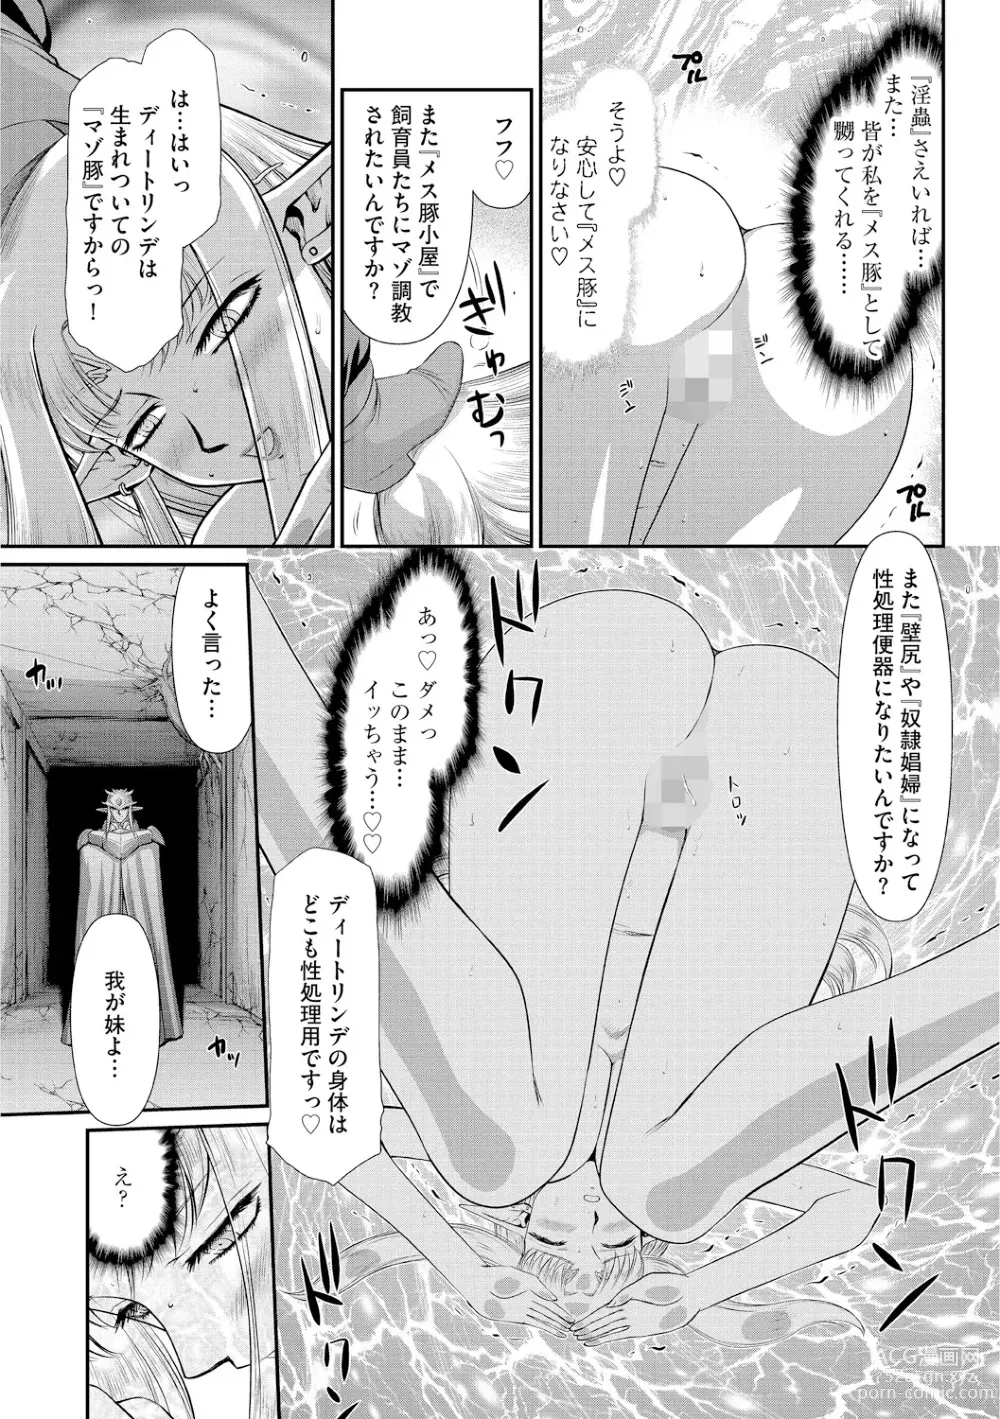 Page 177 of manga Ingoku no Kouki Dietlinde